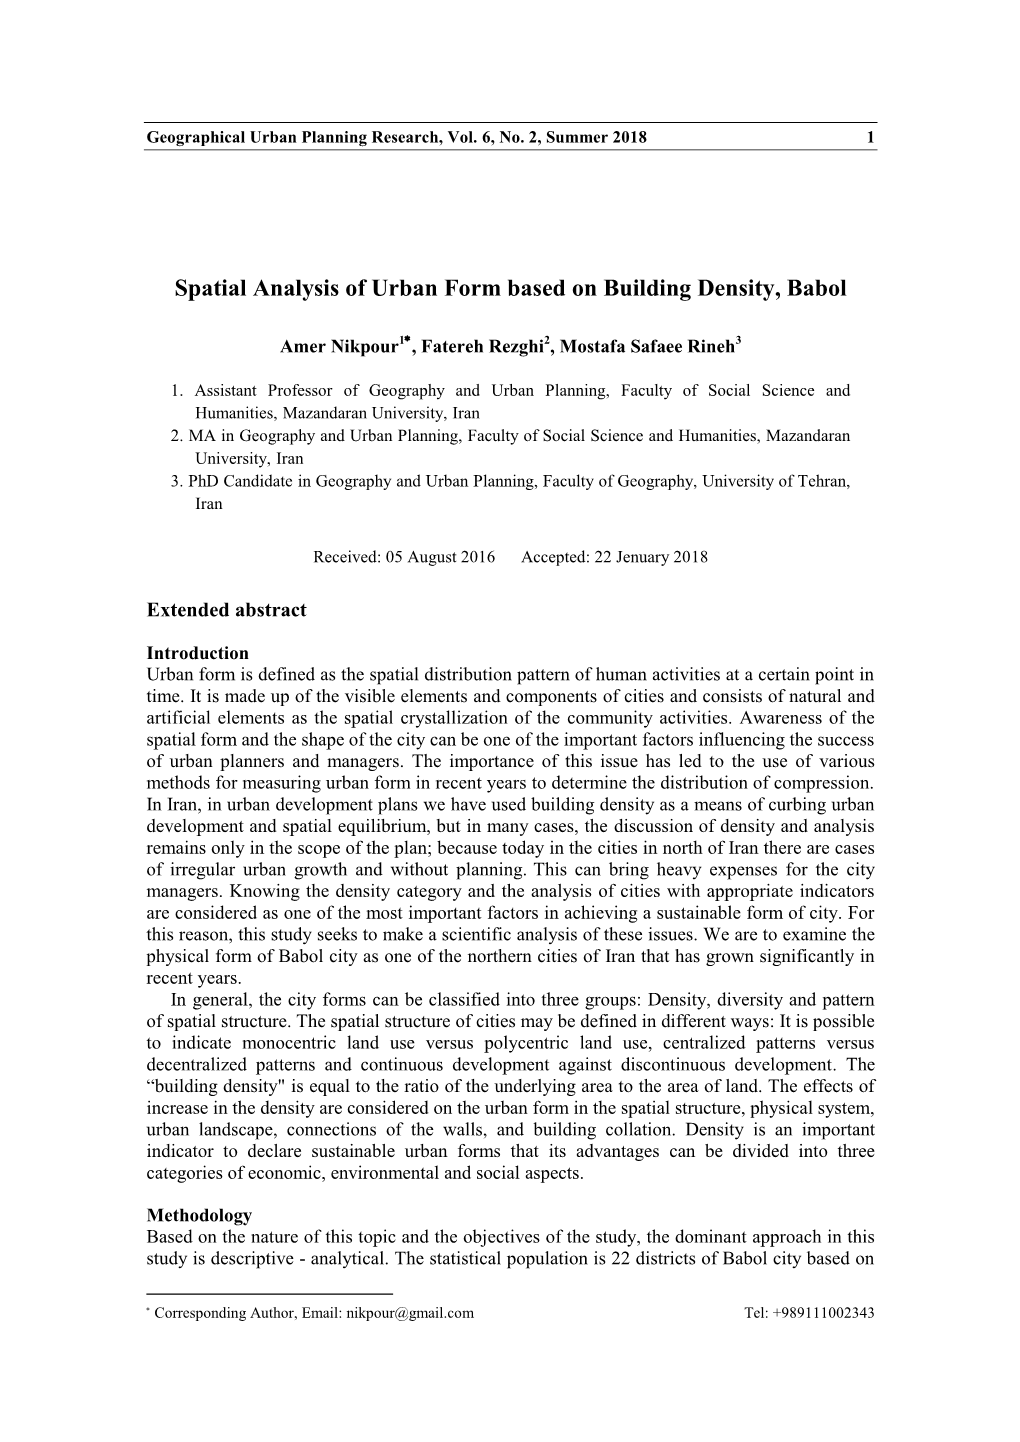 Spatial Analysis of Urban Form Based on Building Density, Babol